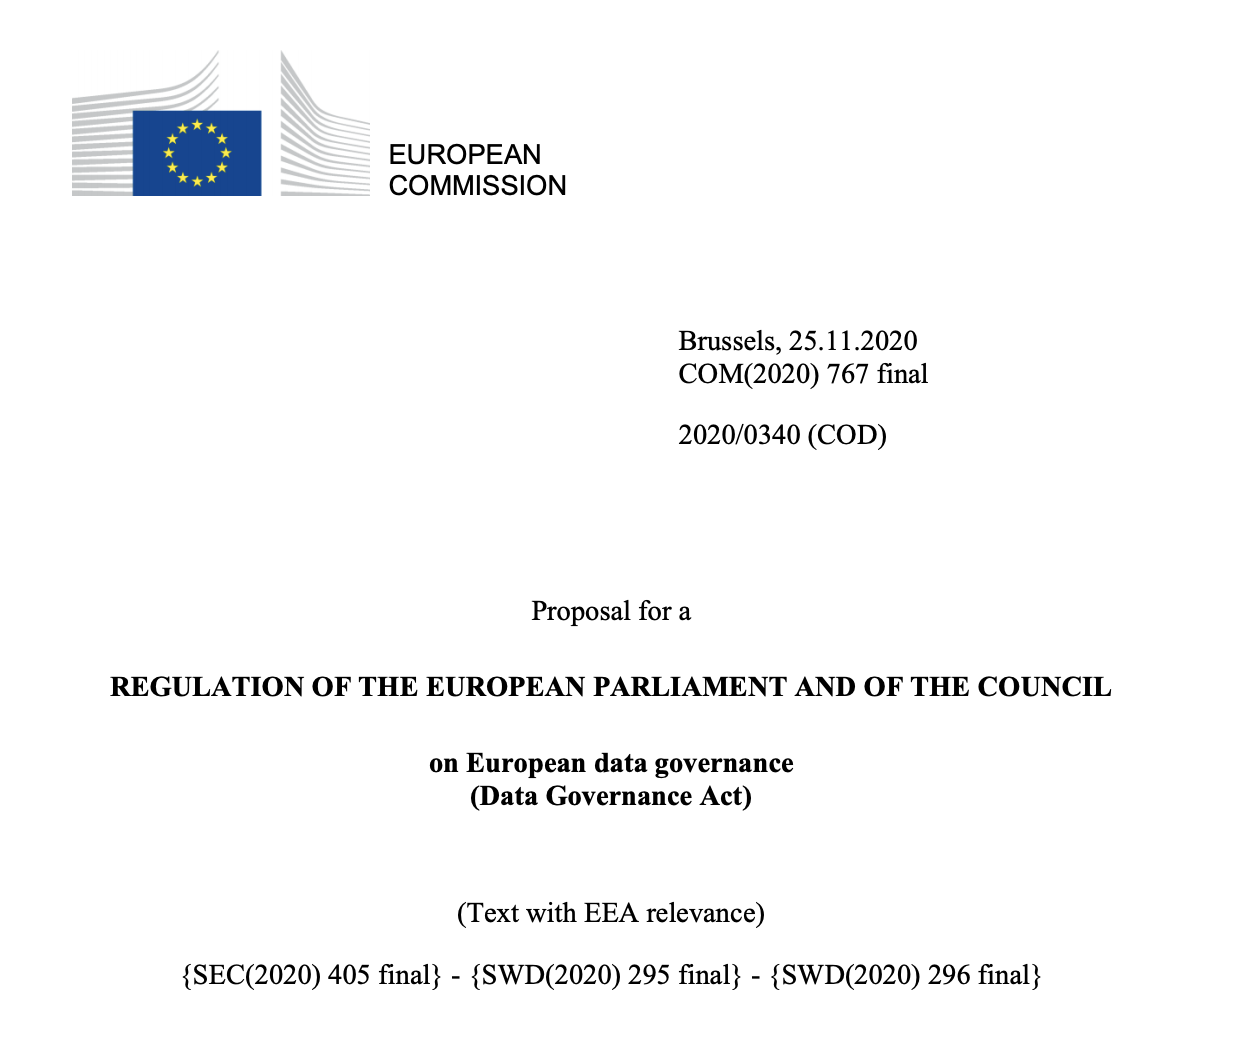 Proposal for European Data Governance